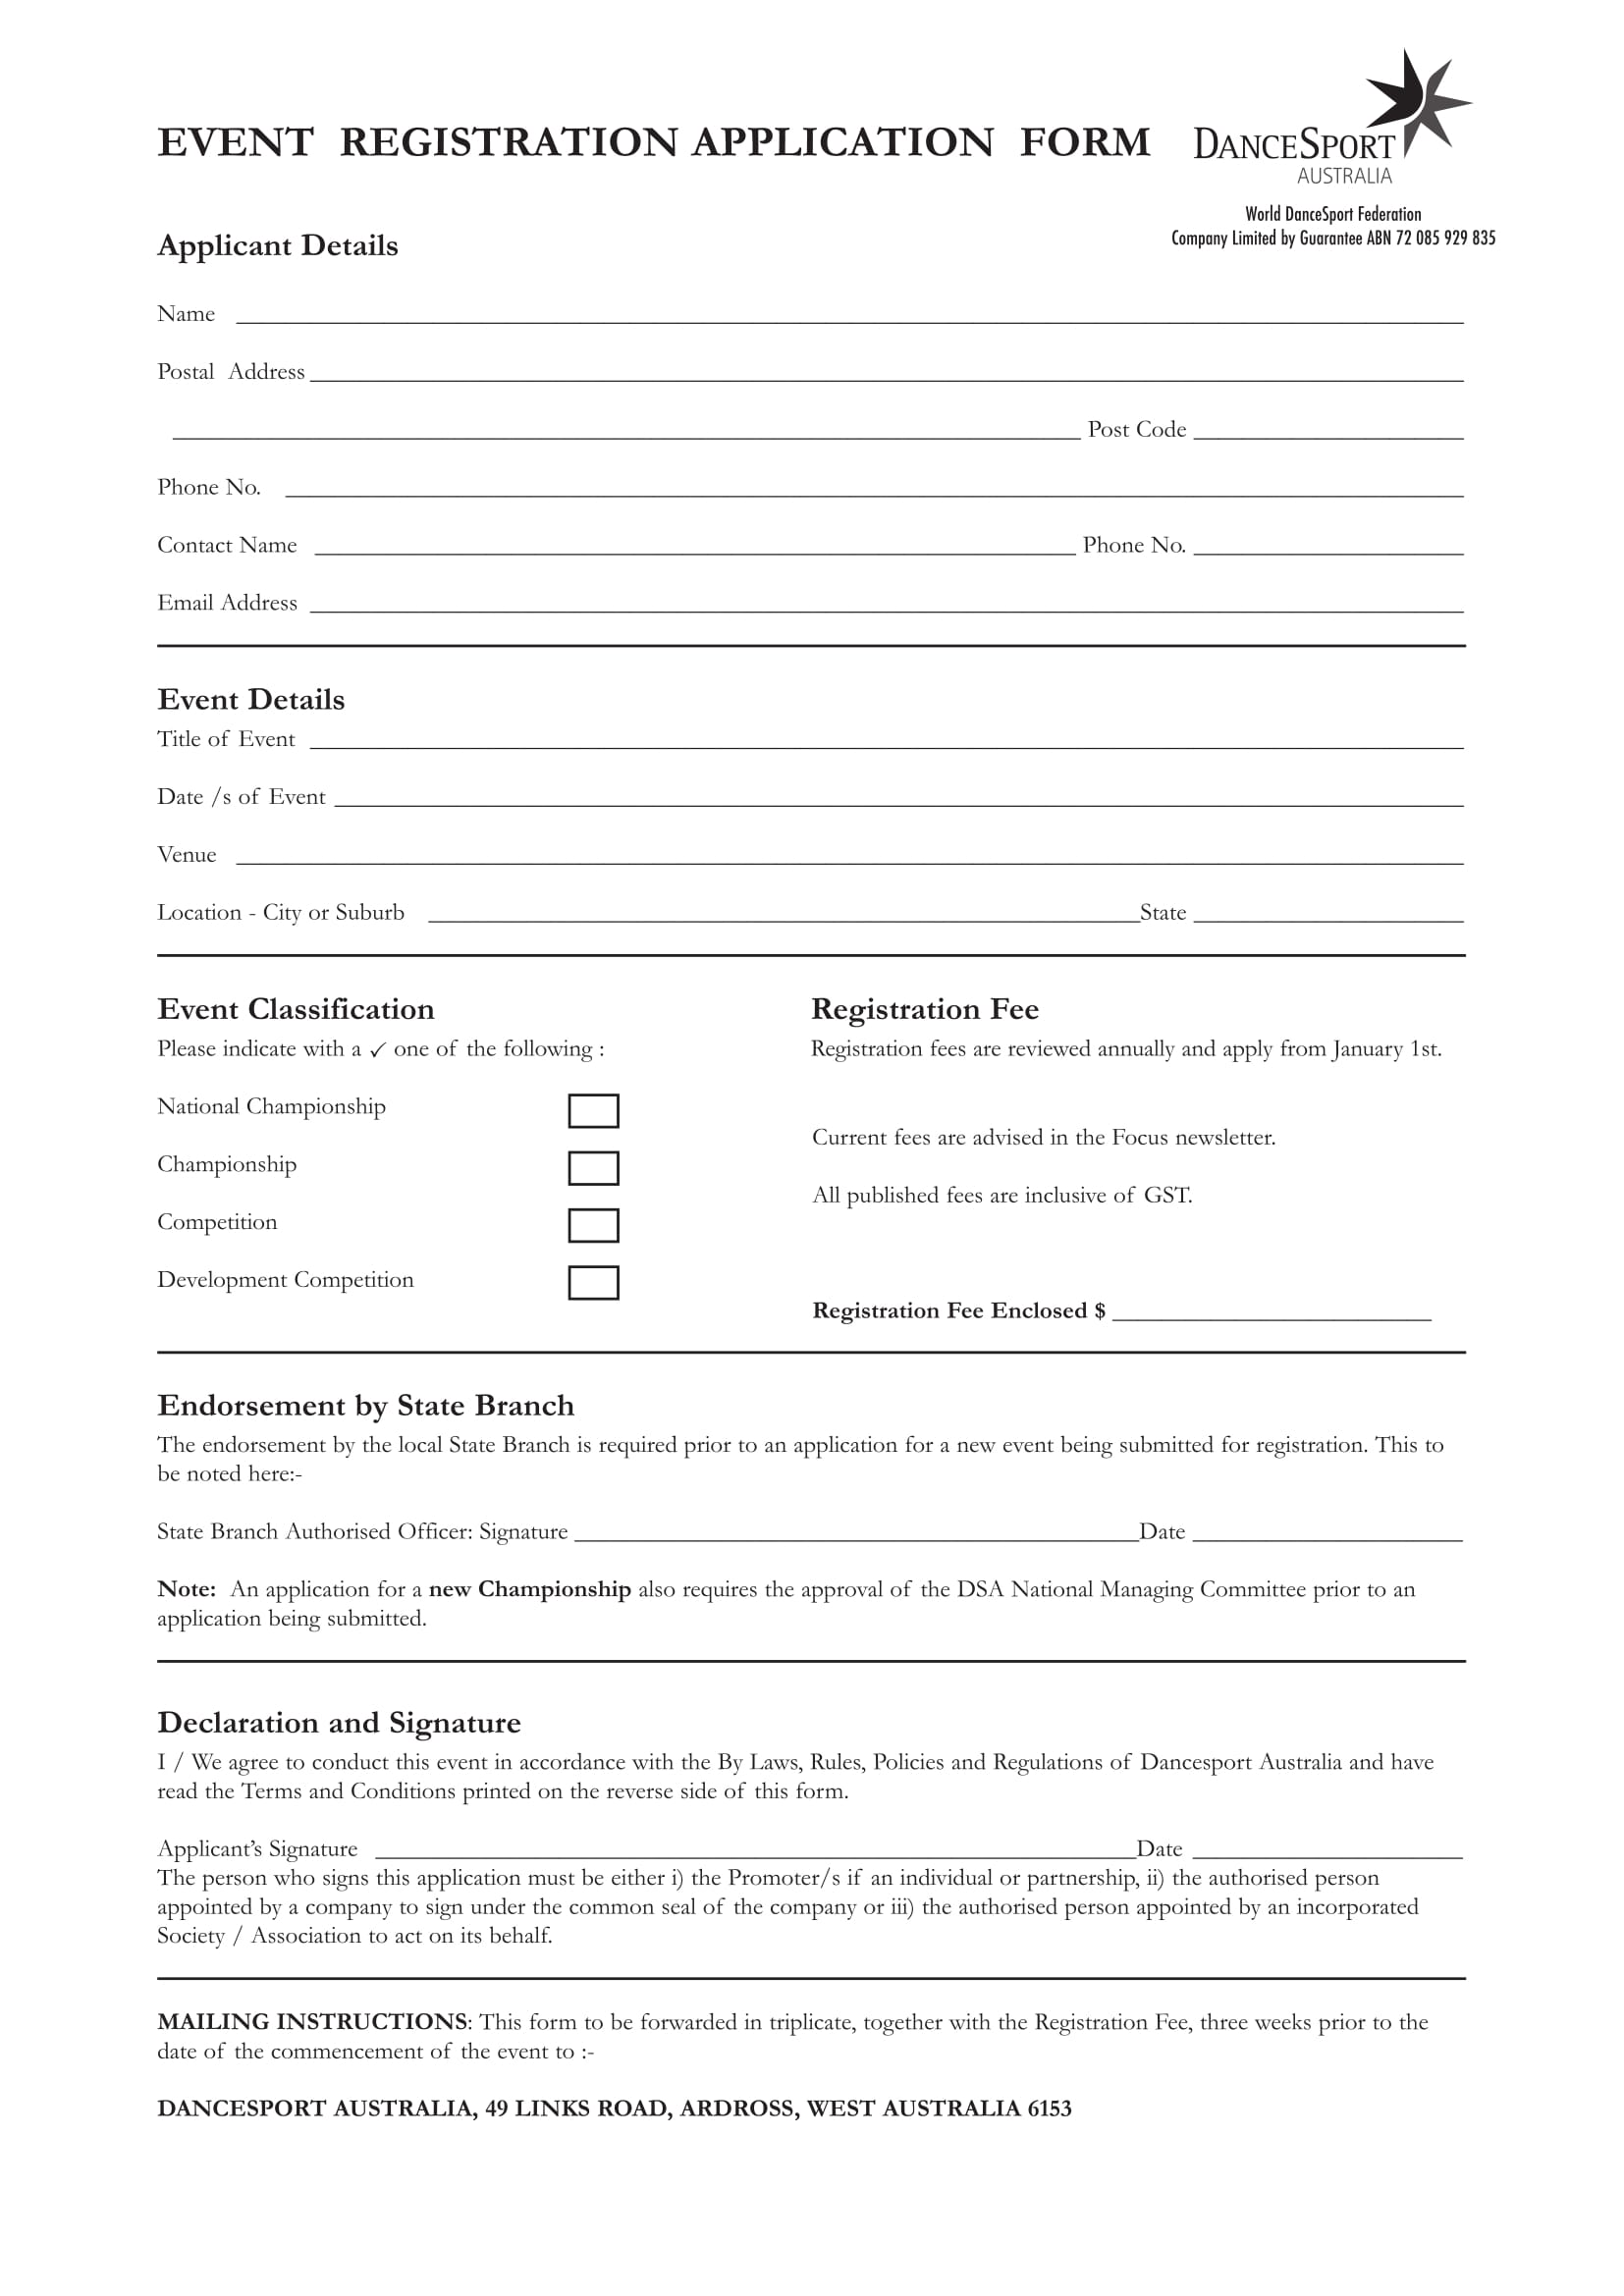 dancesport event registration form 1